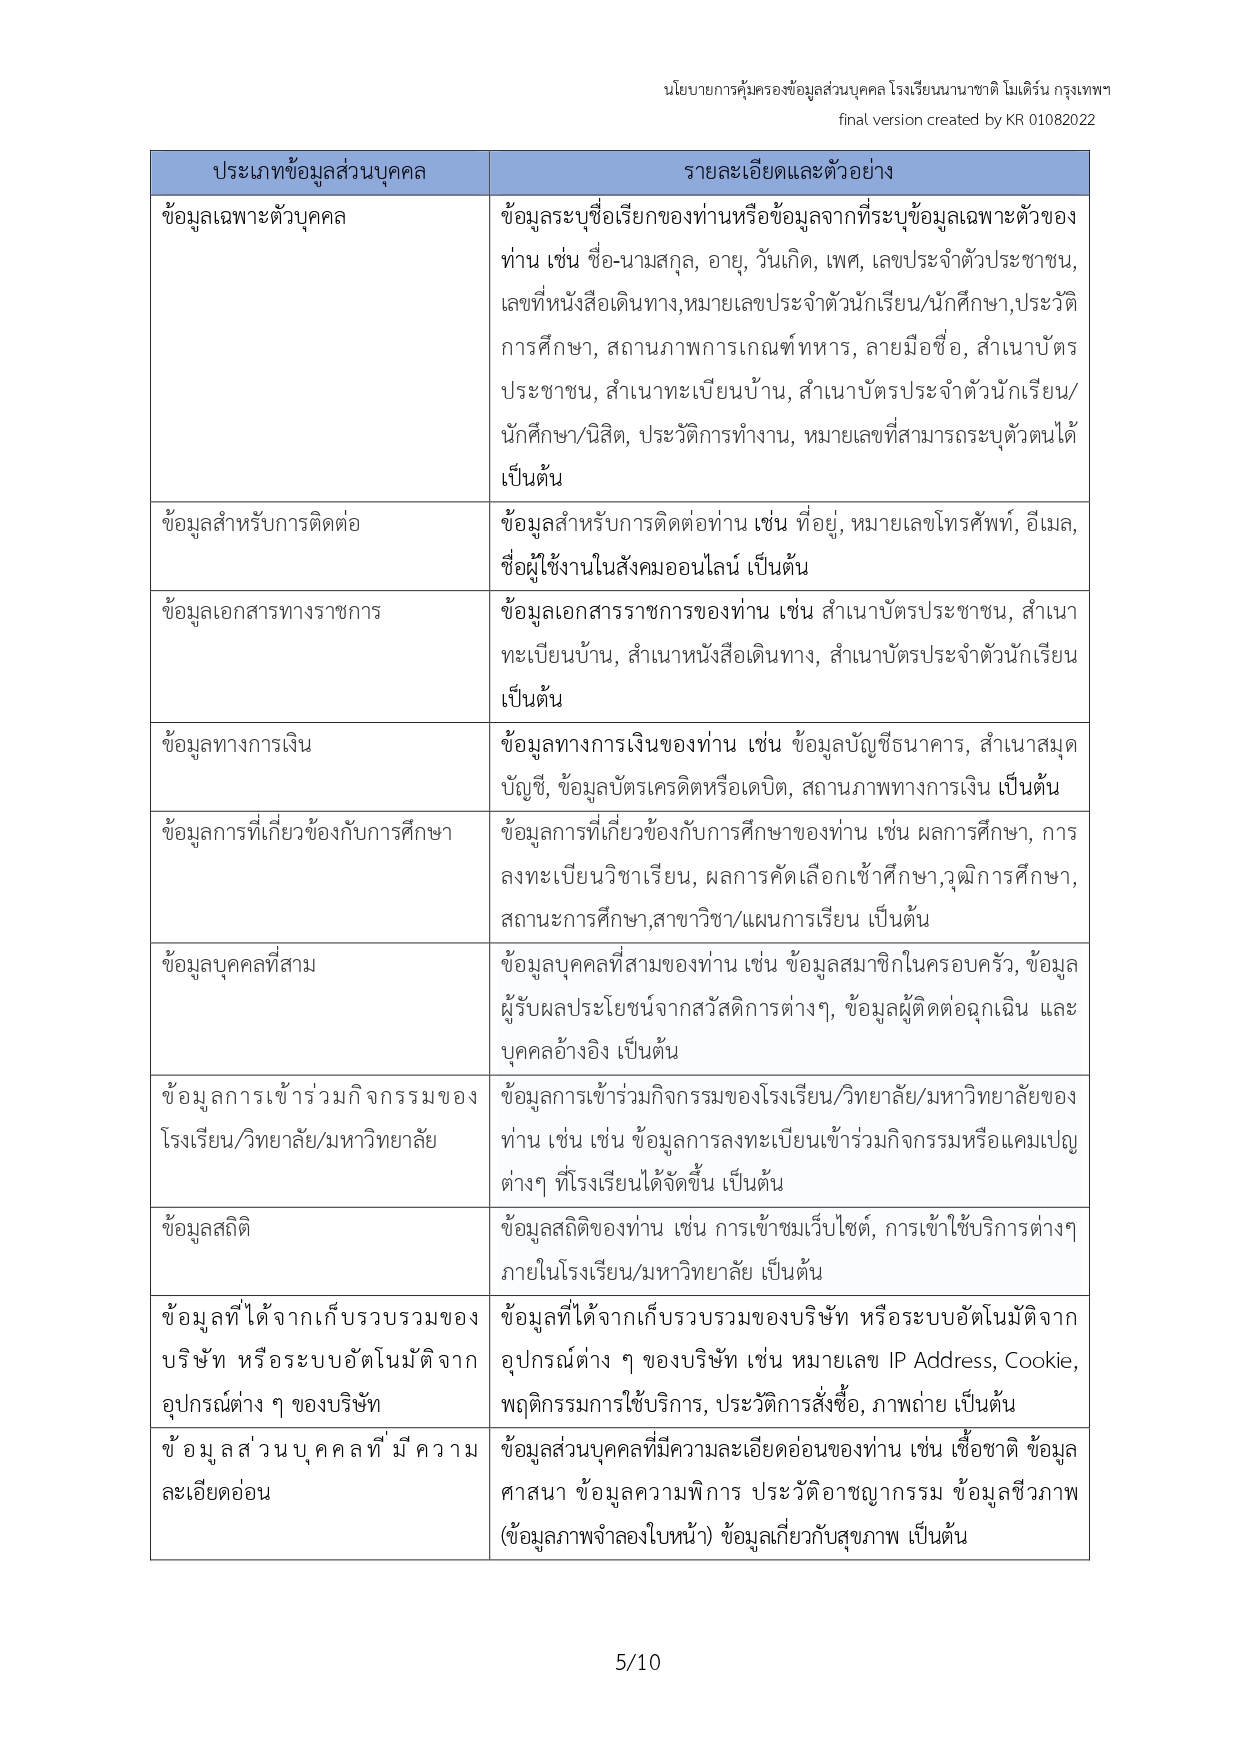 PDPA MISB ภาษาไทย final version 01012566 ไม่ลงชื่อ page 0005